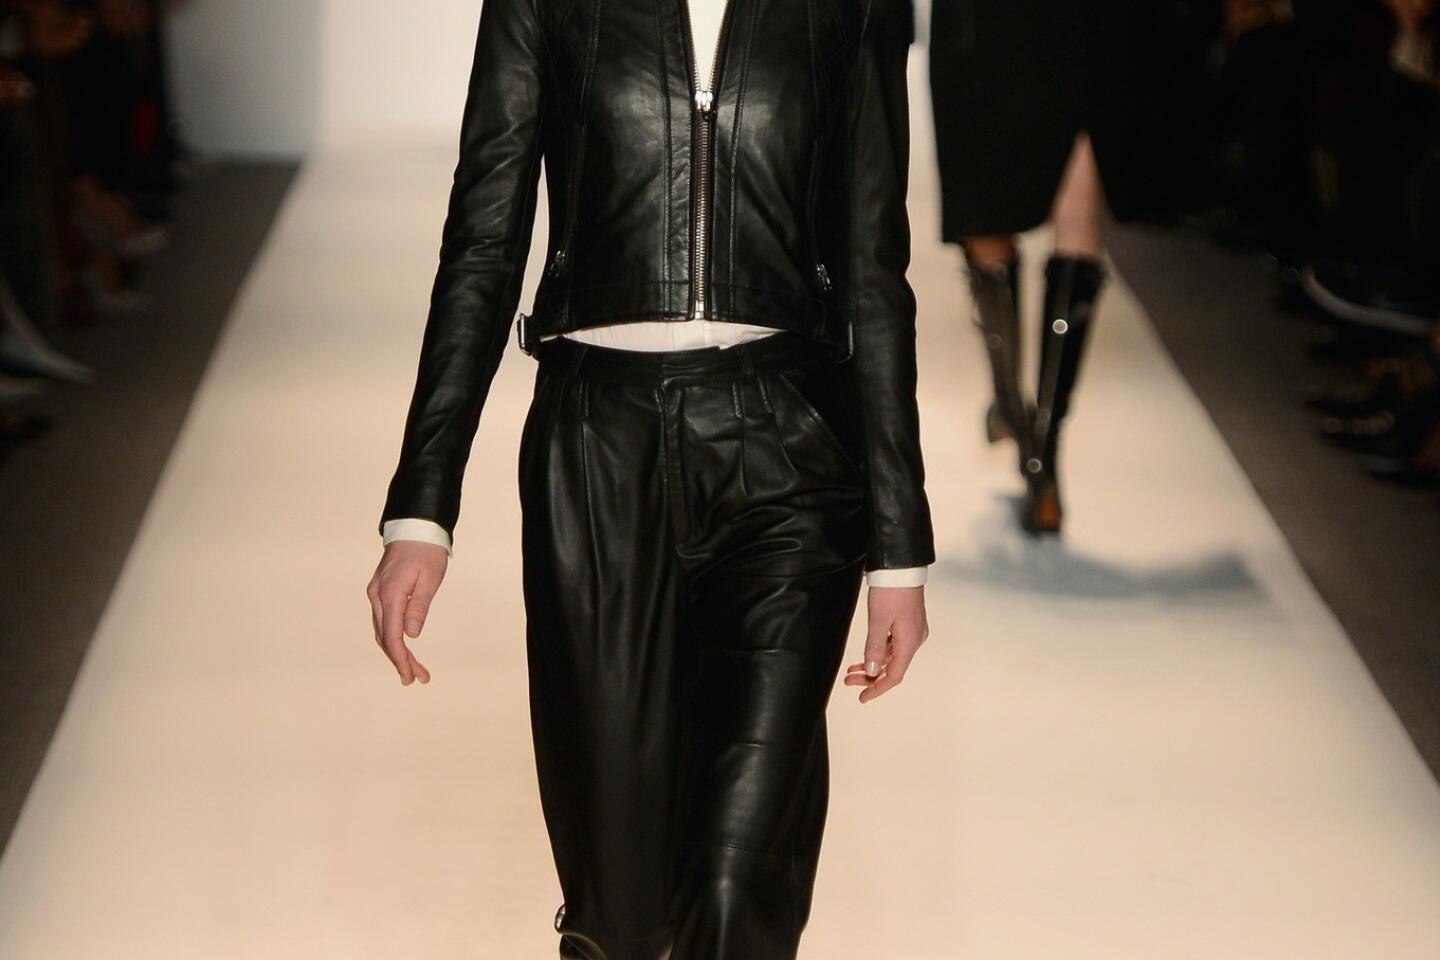 Natalia Bryant Makes Runway Model Debut in Versace's Milan Fashion